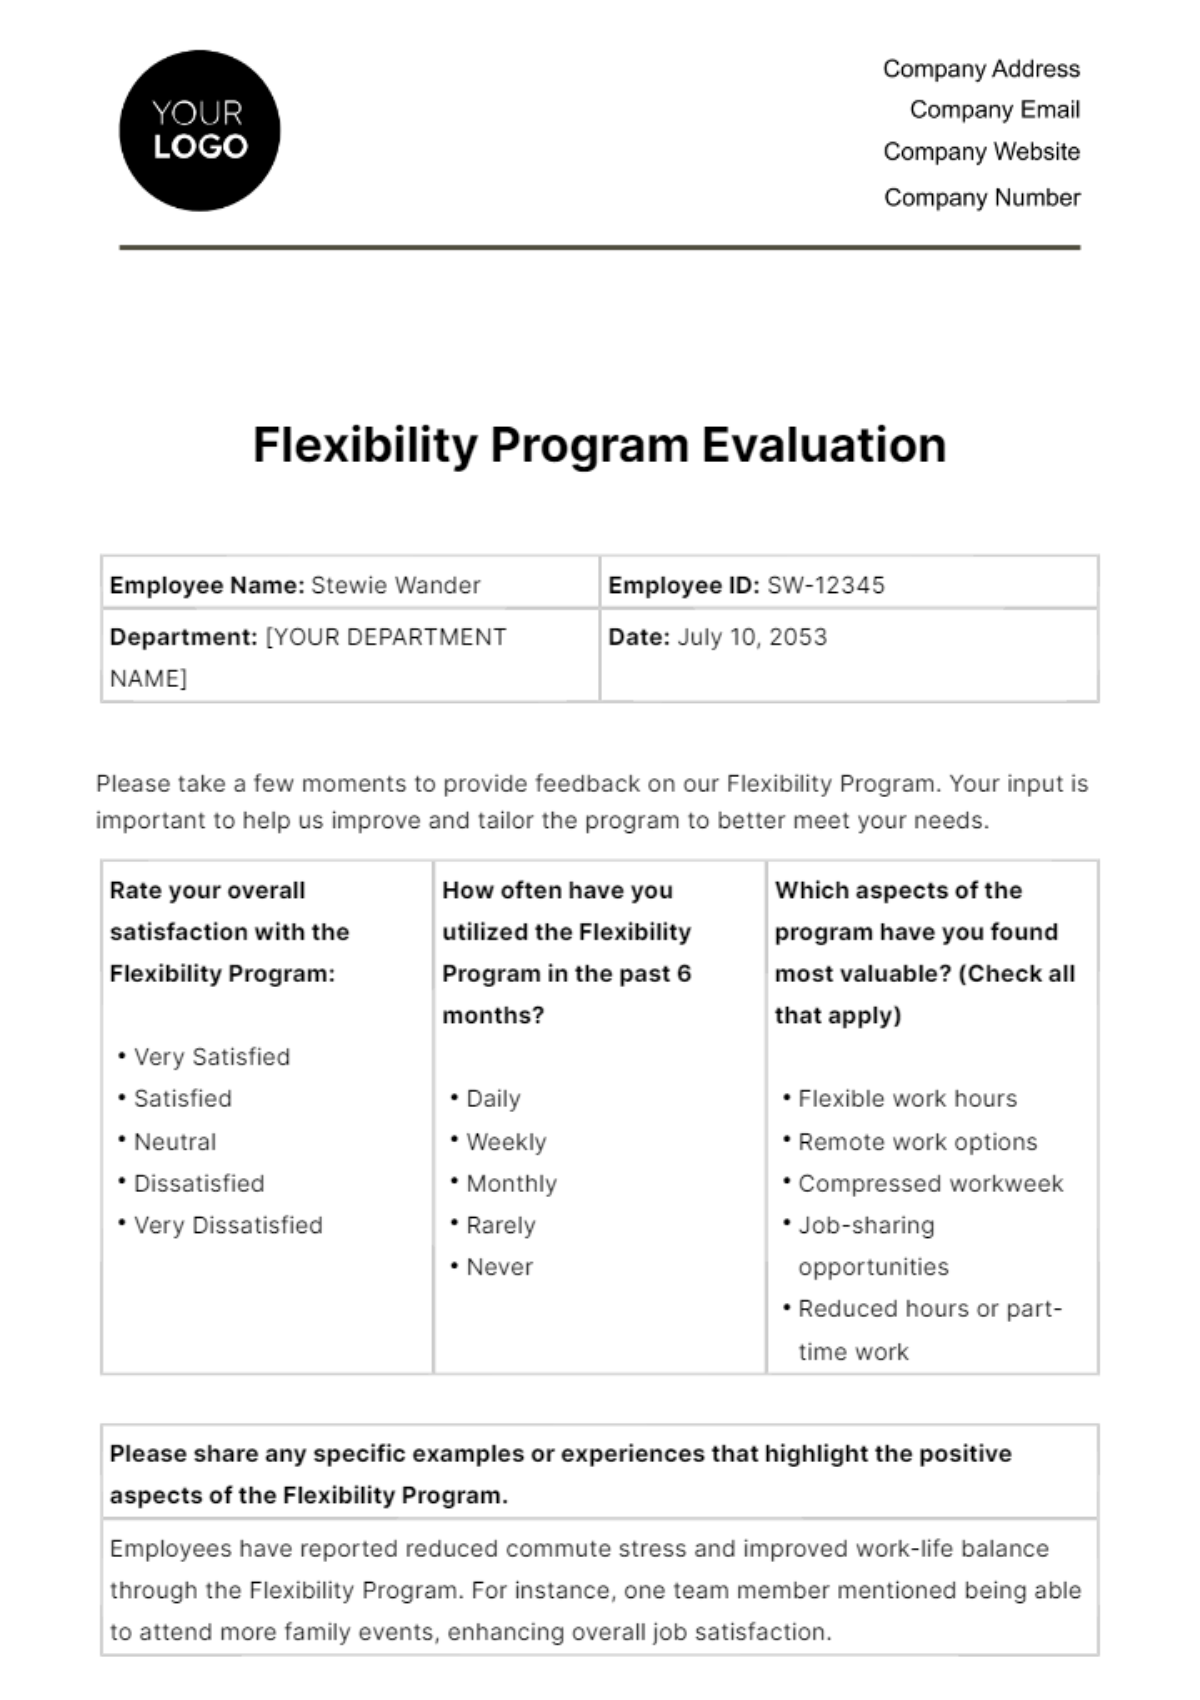 Free Flexibility Program Evaluation HR Template